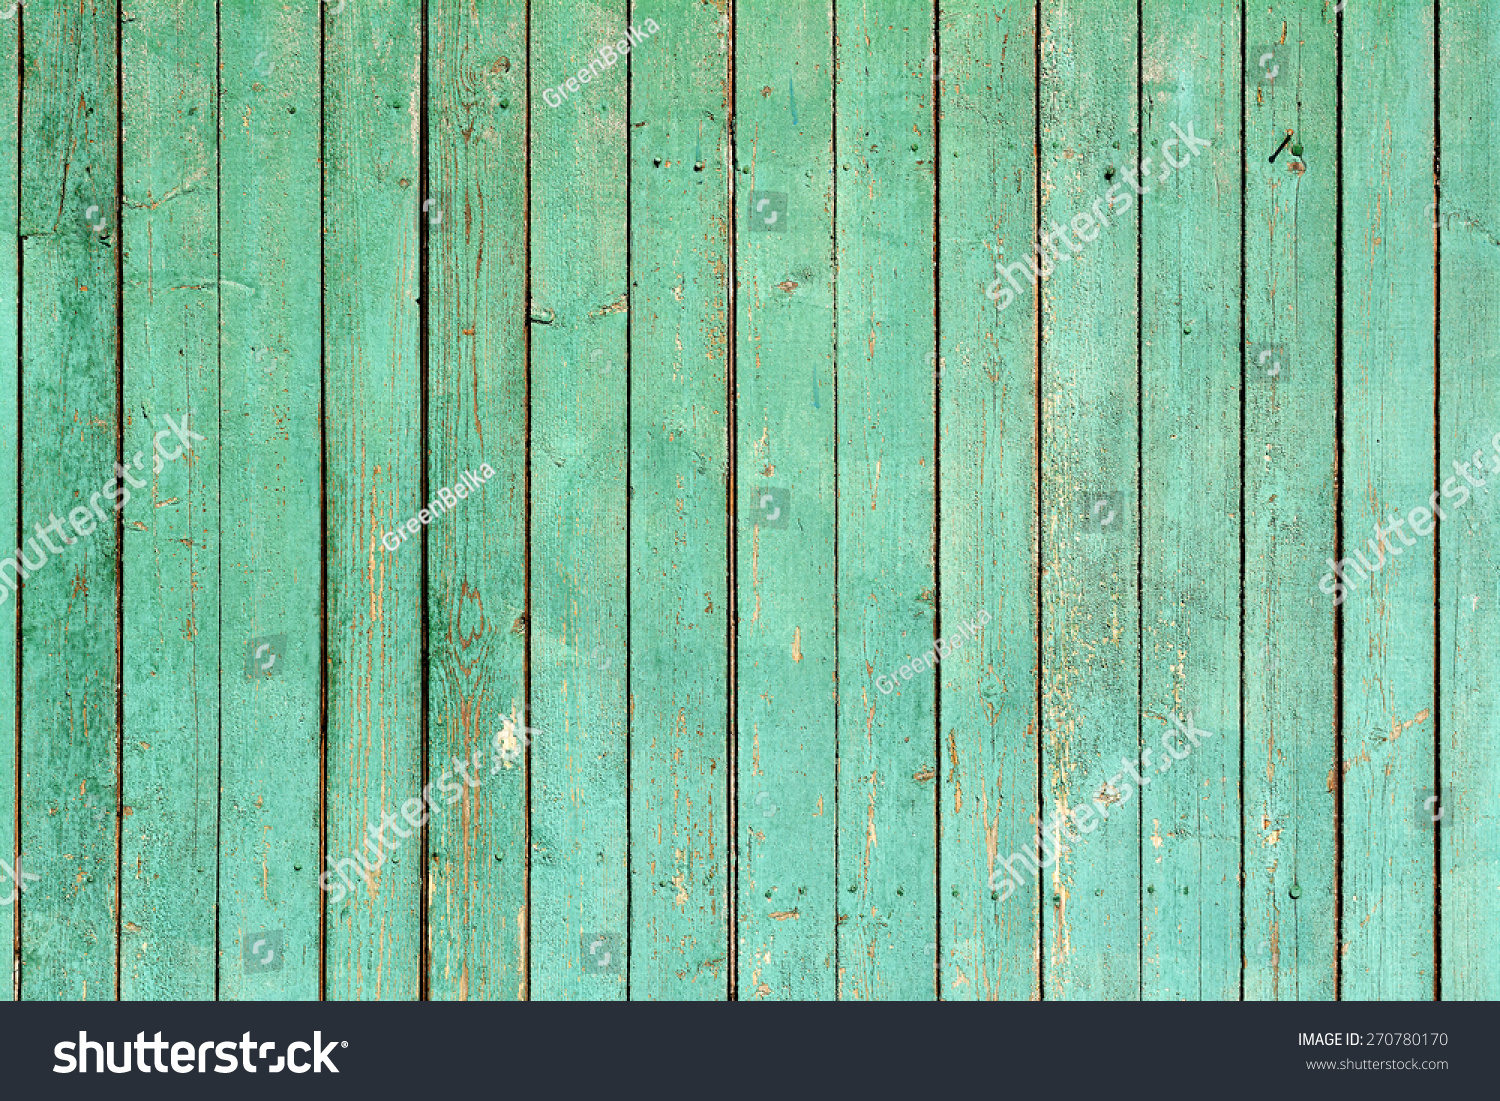 design element. wooden fence #270780170